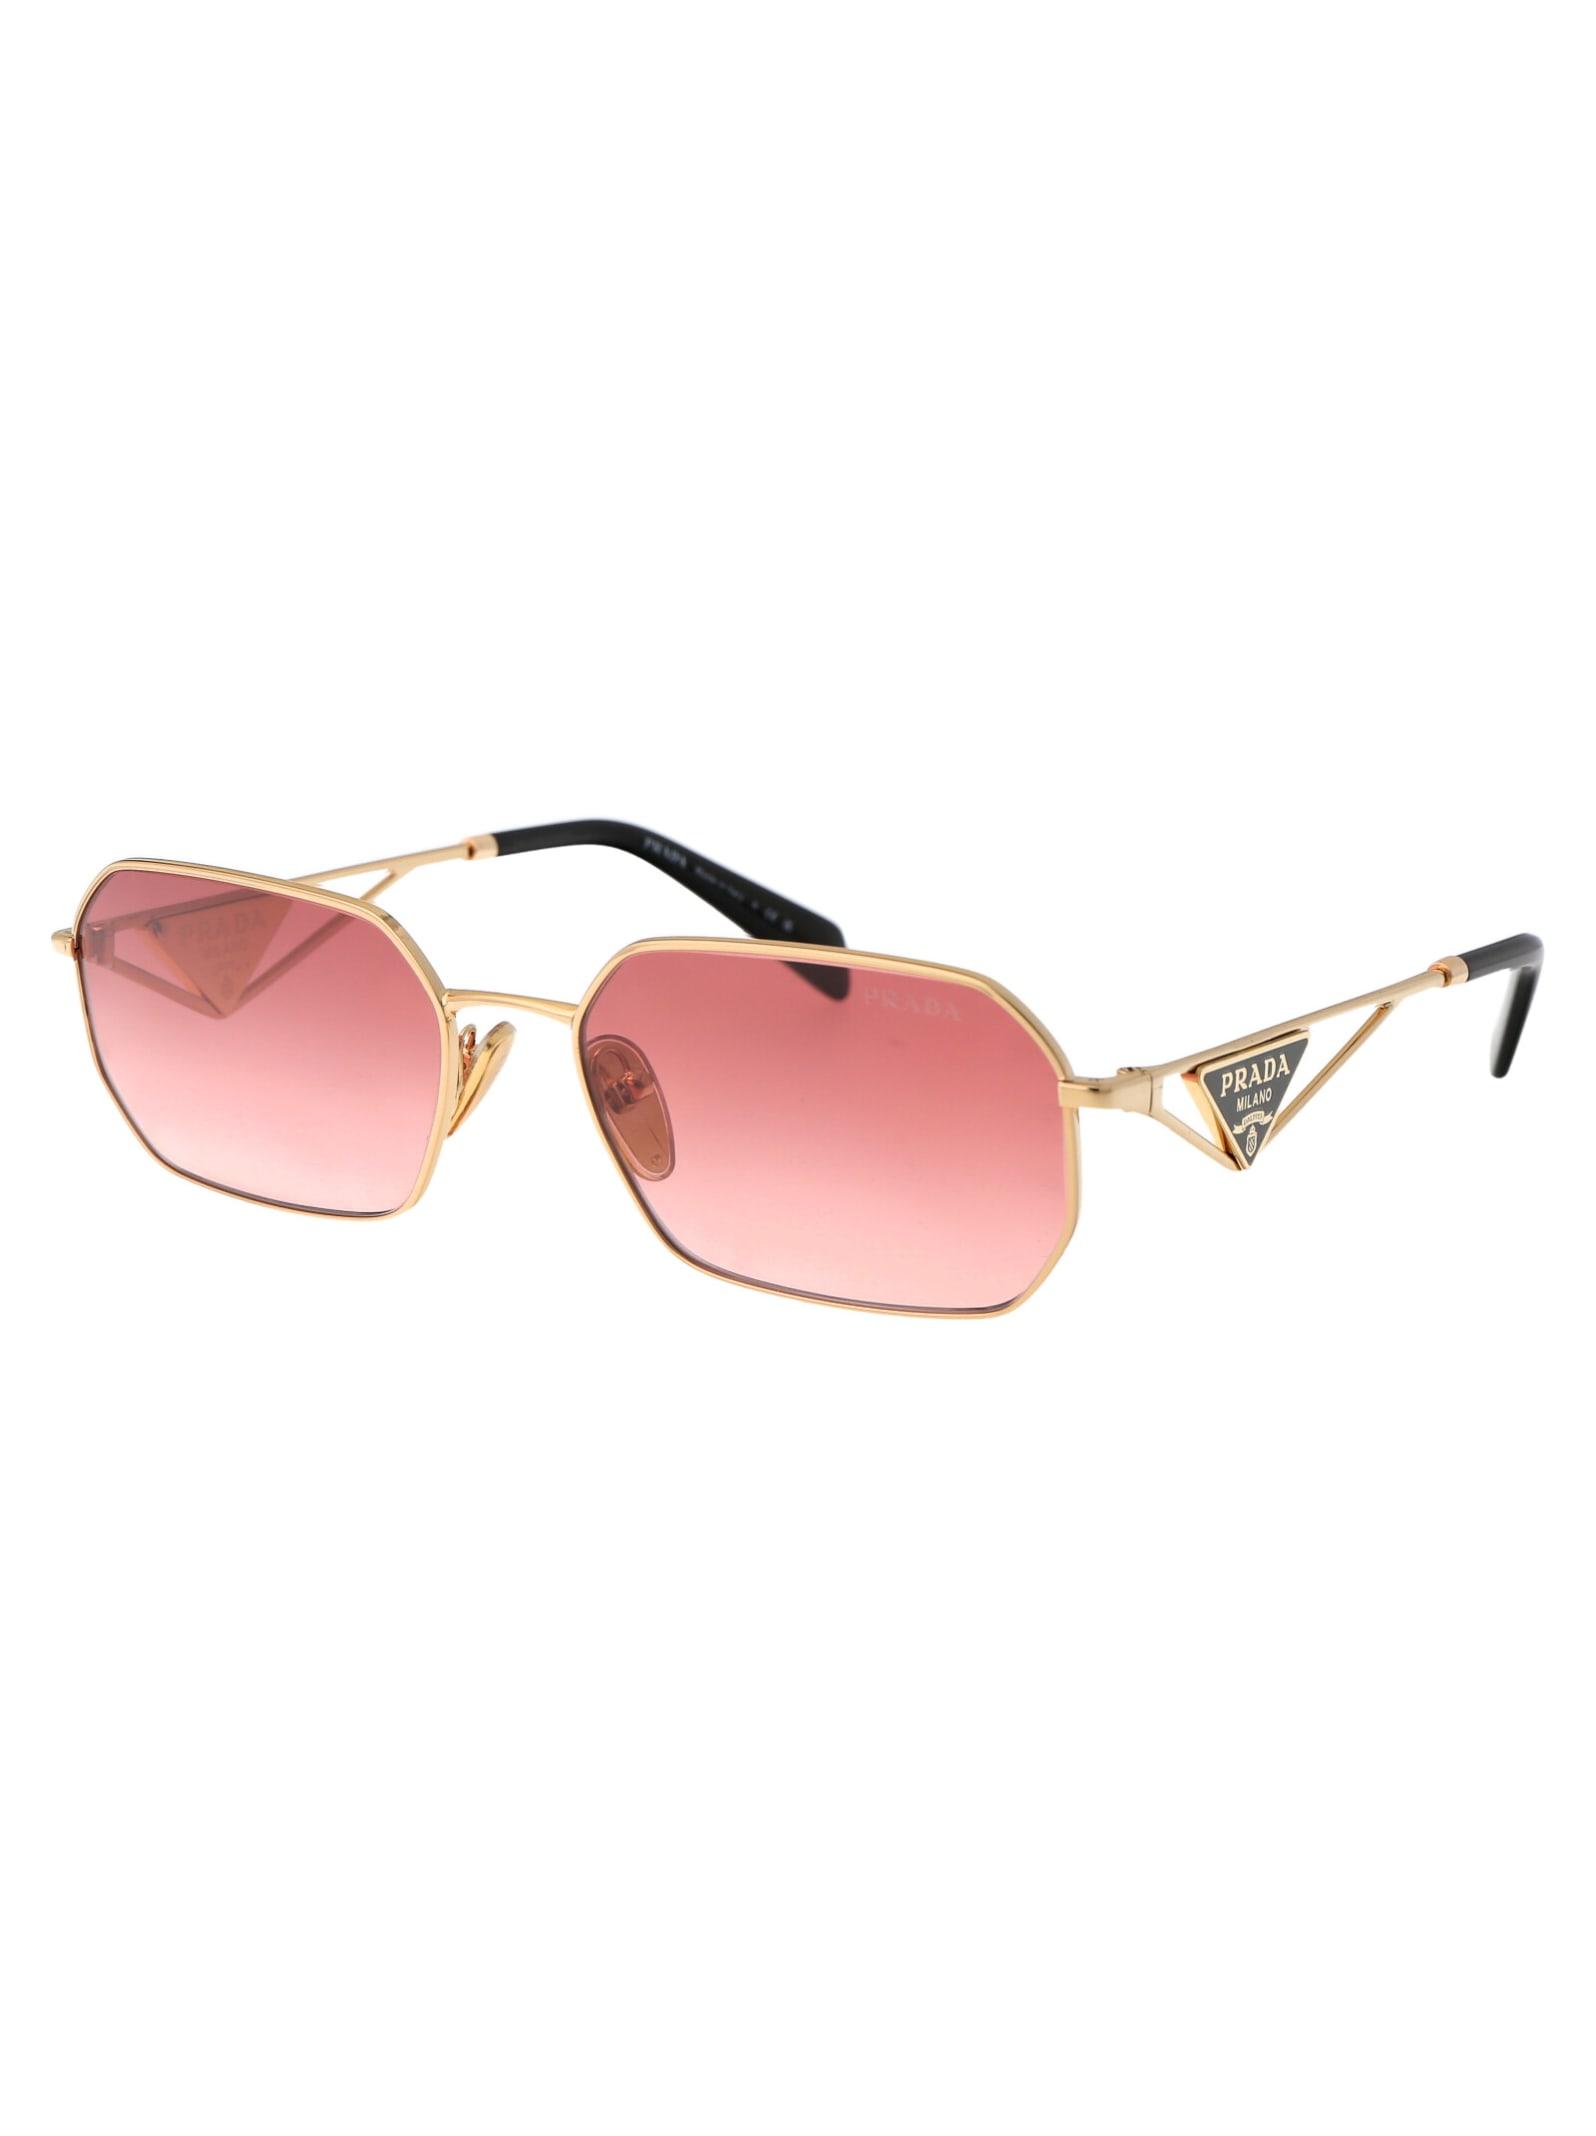 PRADA: sunglasses in acetate and metal - Red | Prada sunglasses SPR 65Z  online at GIGLIO.COM